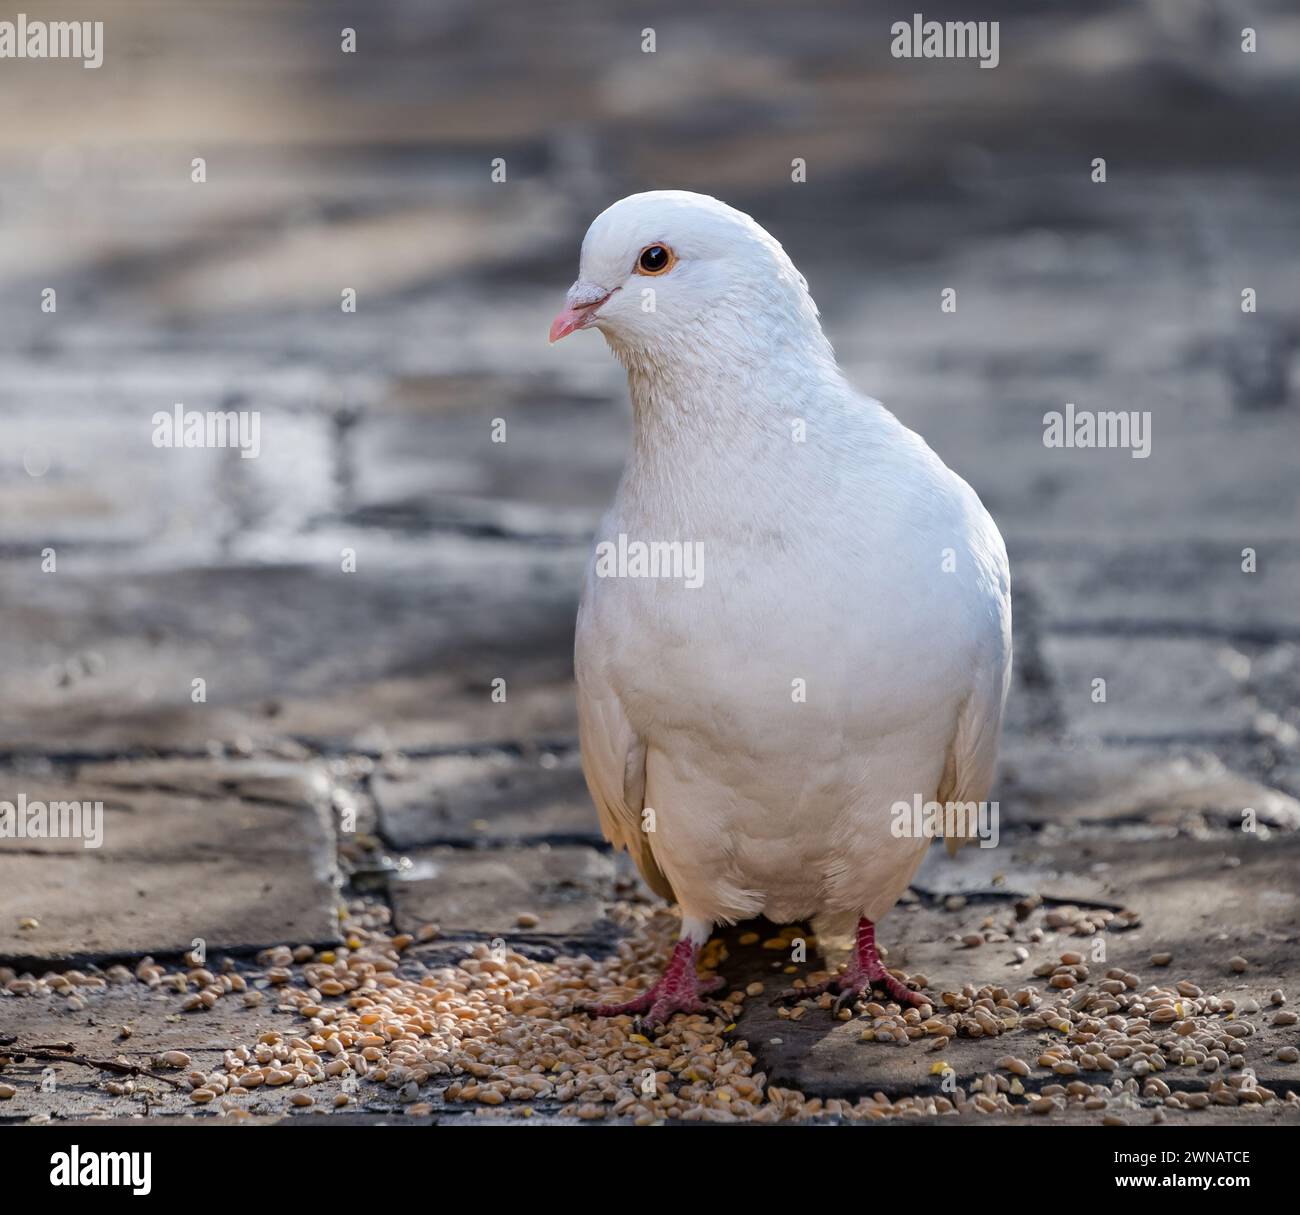 Dove feeding on bird seed spread on footpath, Scotland, UK Stock Photo